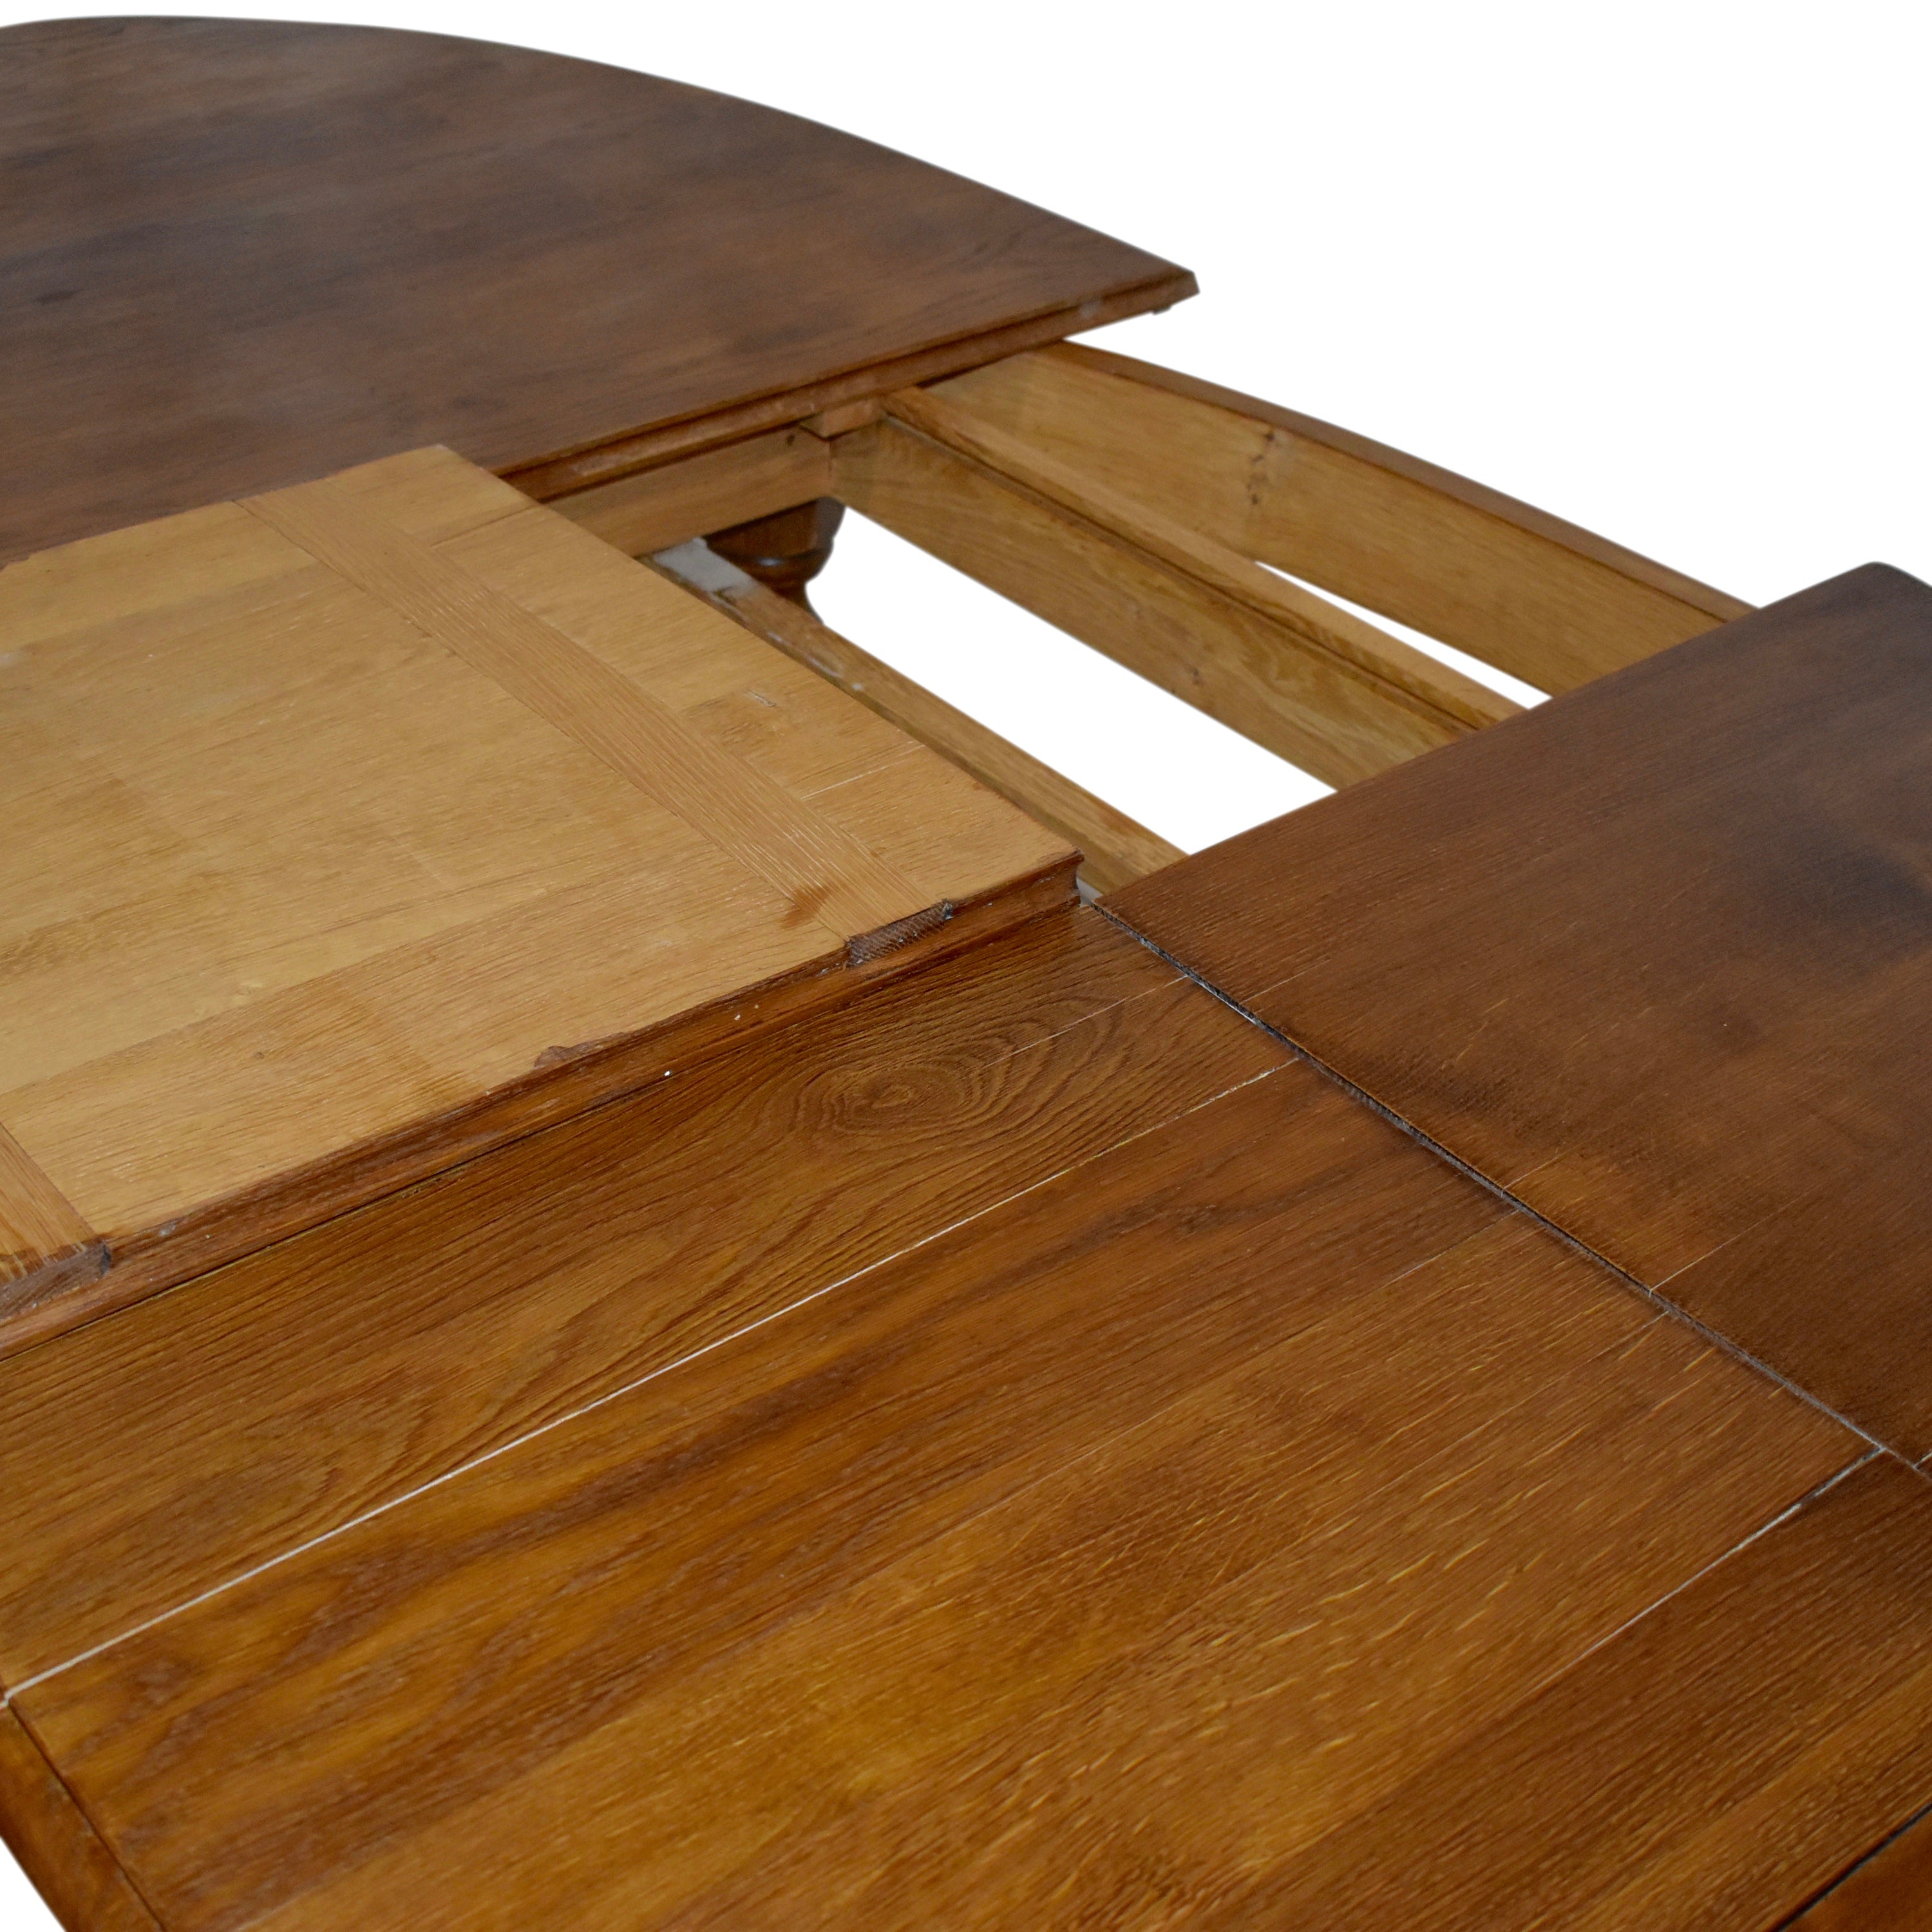 Oval Oak Dining Table